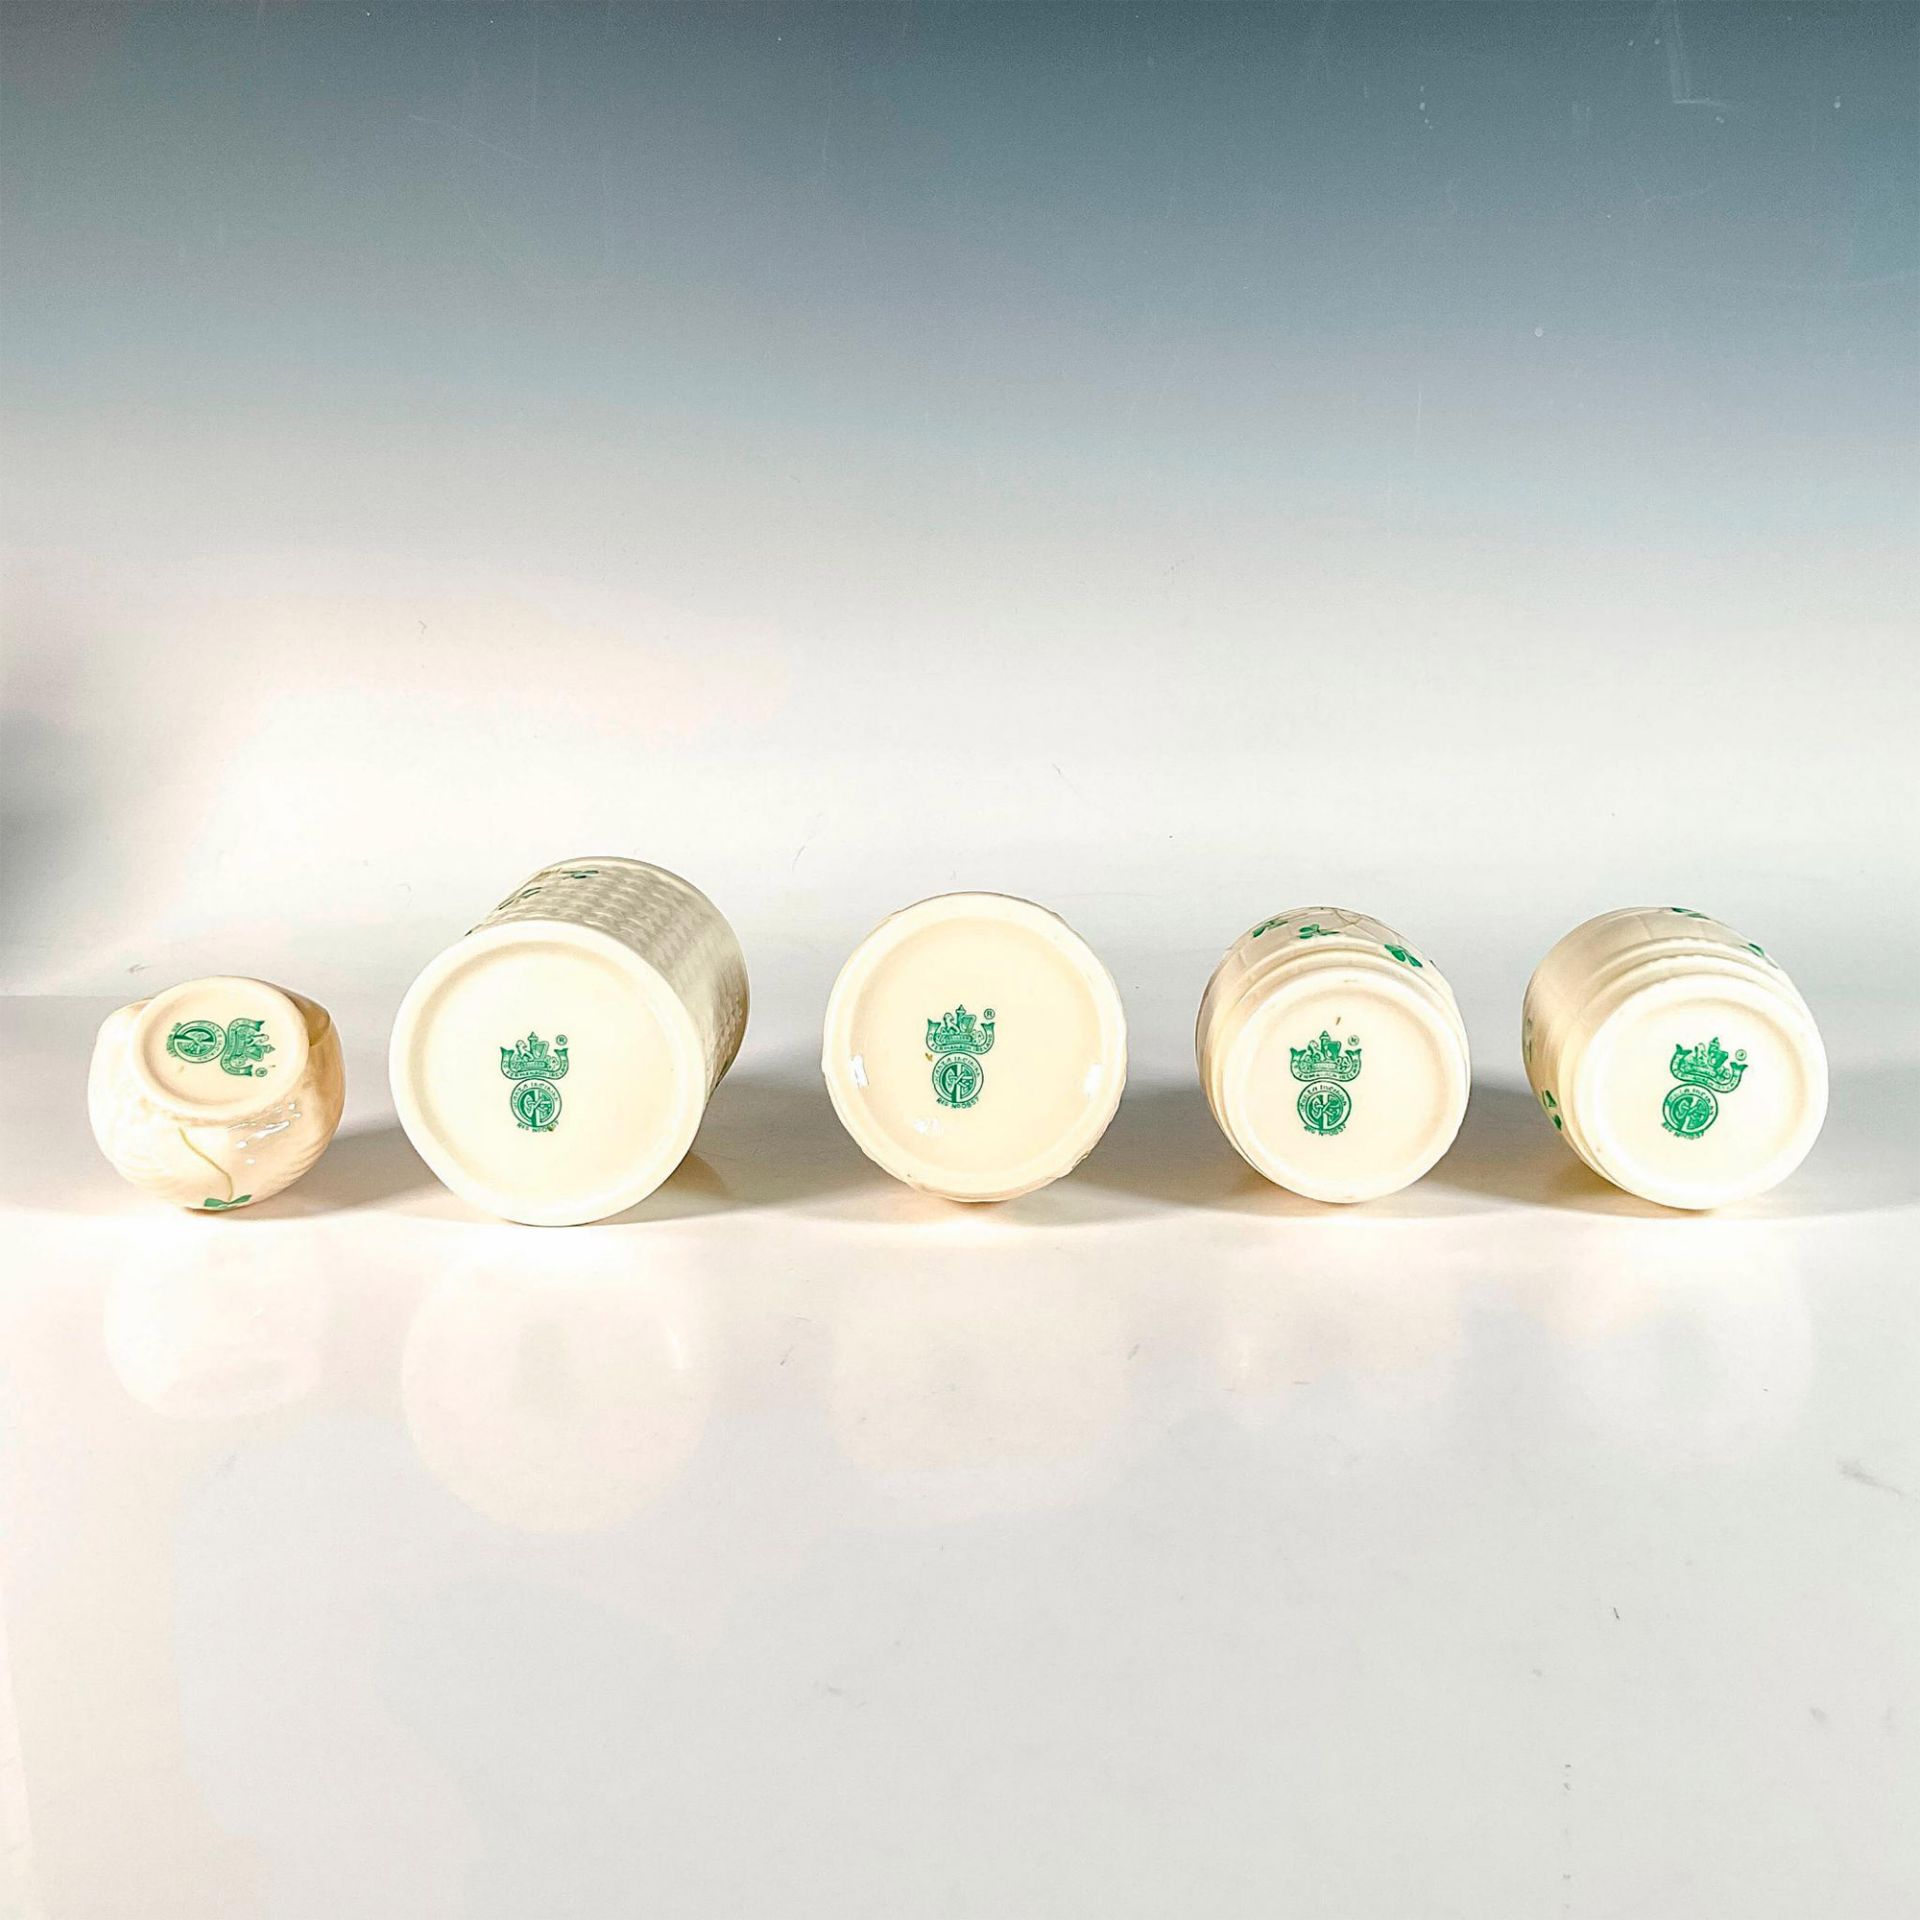 5pc Belleek Porcelain Marmalade Jars, Shamrock - Image 4 of 4